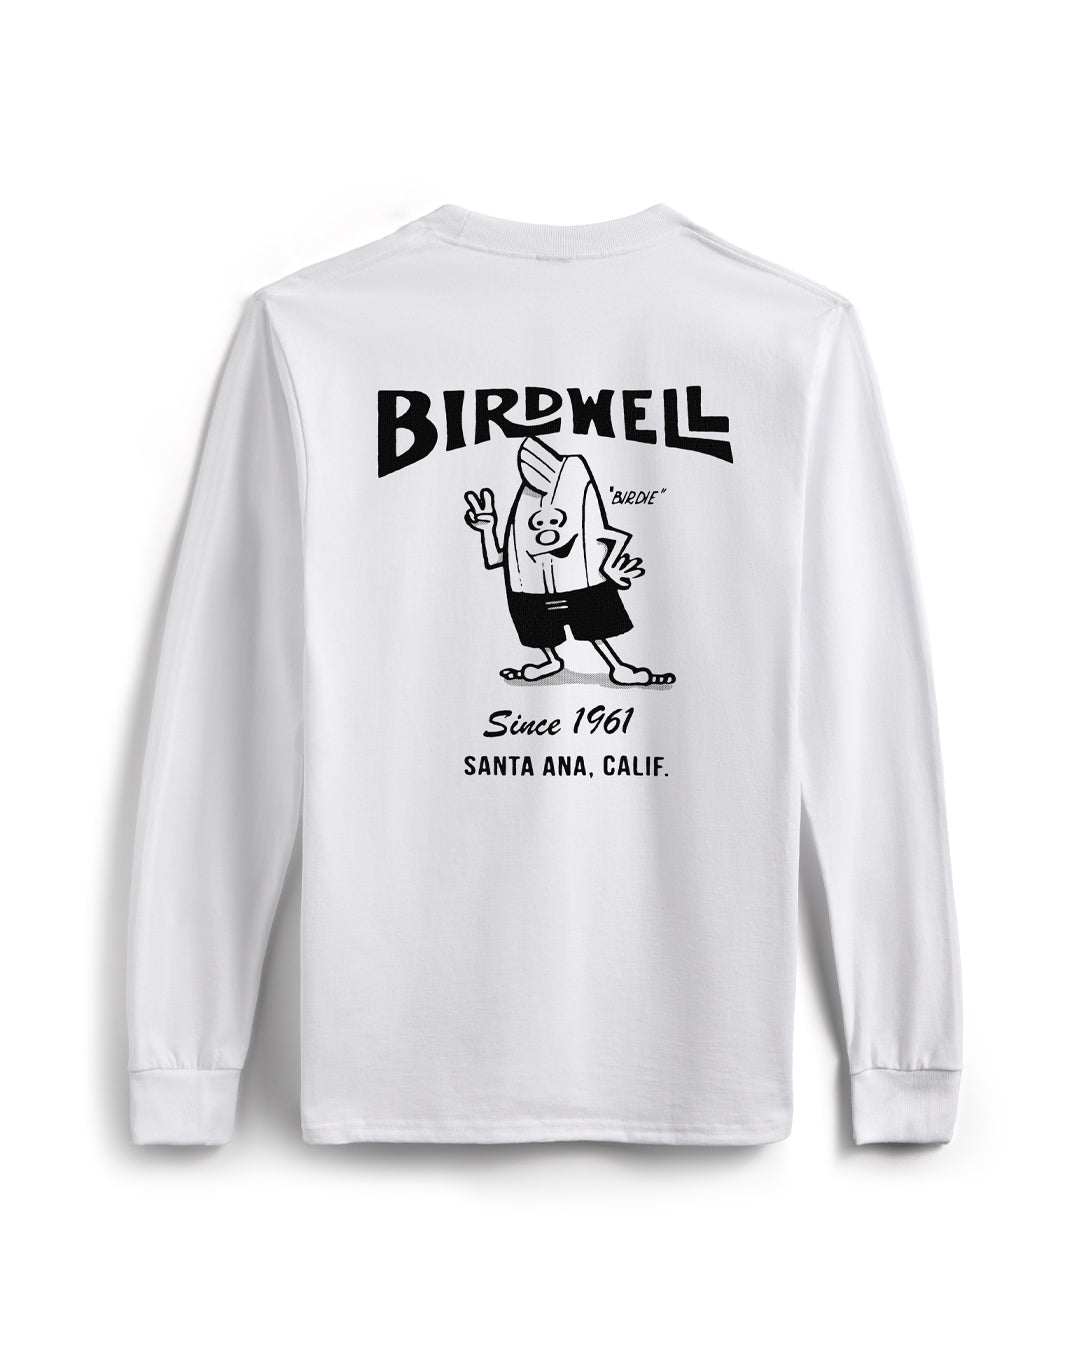 Birdwell 
'61 Long Sleeve T-Shirt - White - Sun Diego Boardshop